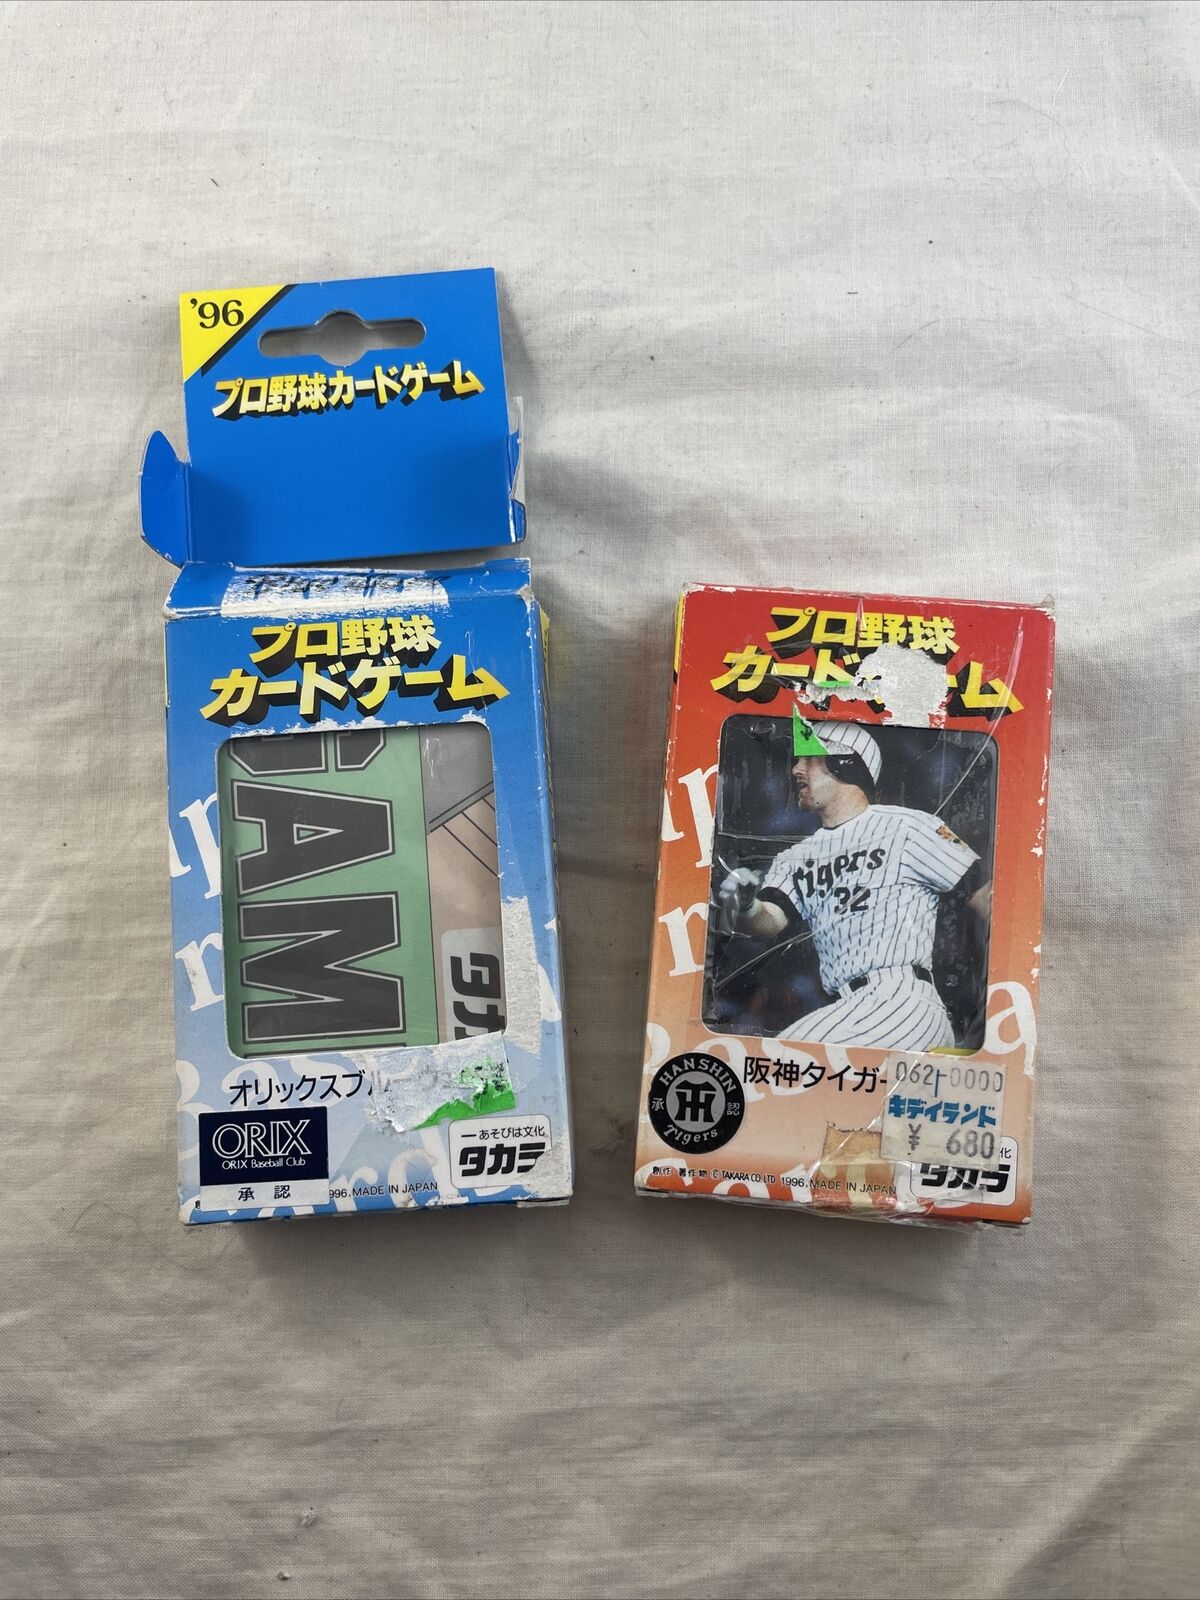 Takara 96 Professional Baseball Card Game Orix Blue Web